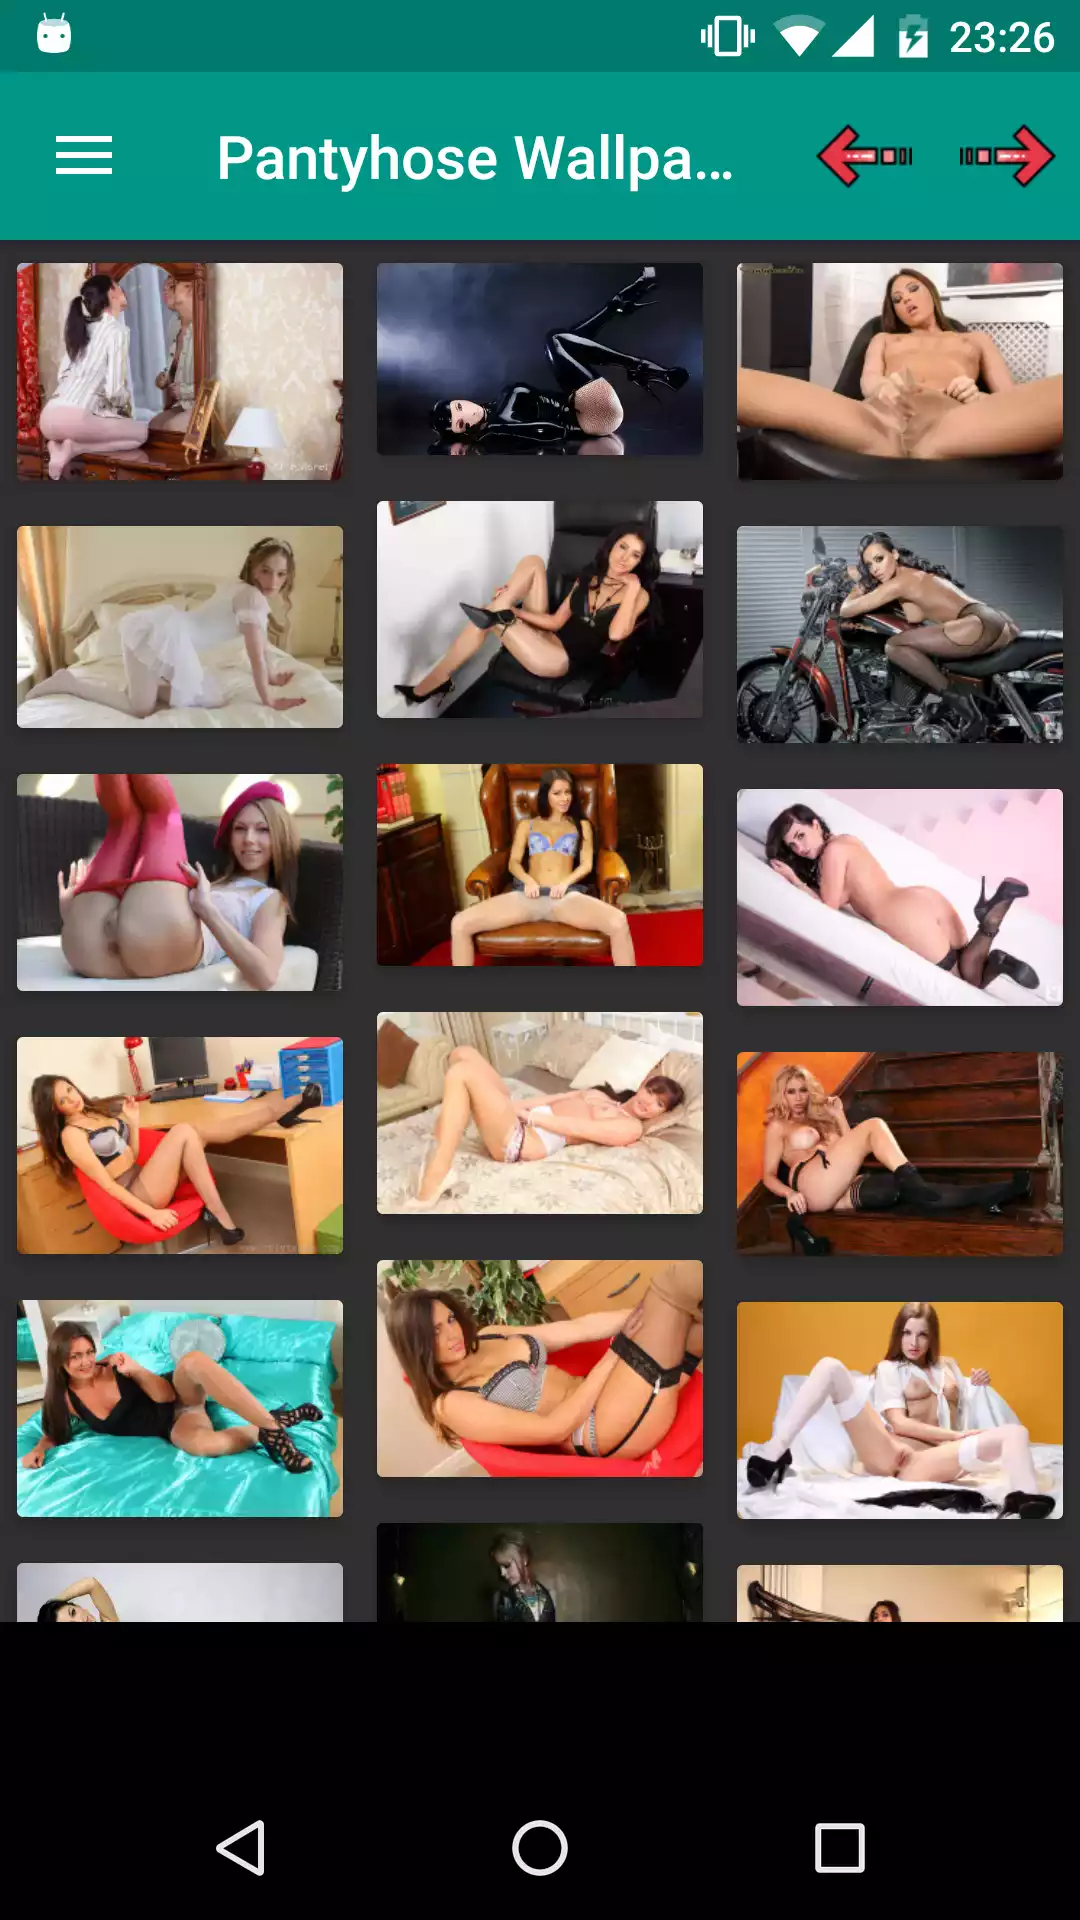 Pantyhouse backgrounds pics,amateur,hentai,photos,image,download,pantyhouse,gallery,harem,nylon,apps,pornstars,apk,fetish,sexy,manga,تطبيق,هنتاي,watching,erotic,صور,comix,photo,app,wallpapers